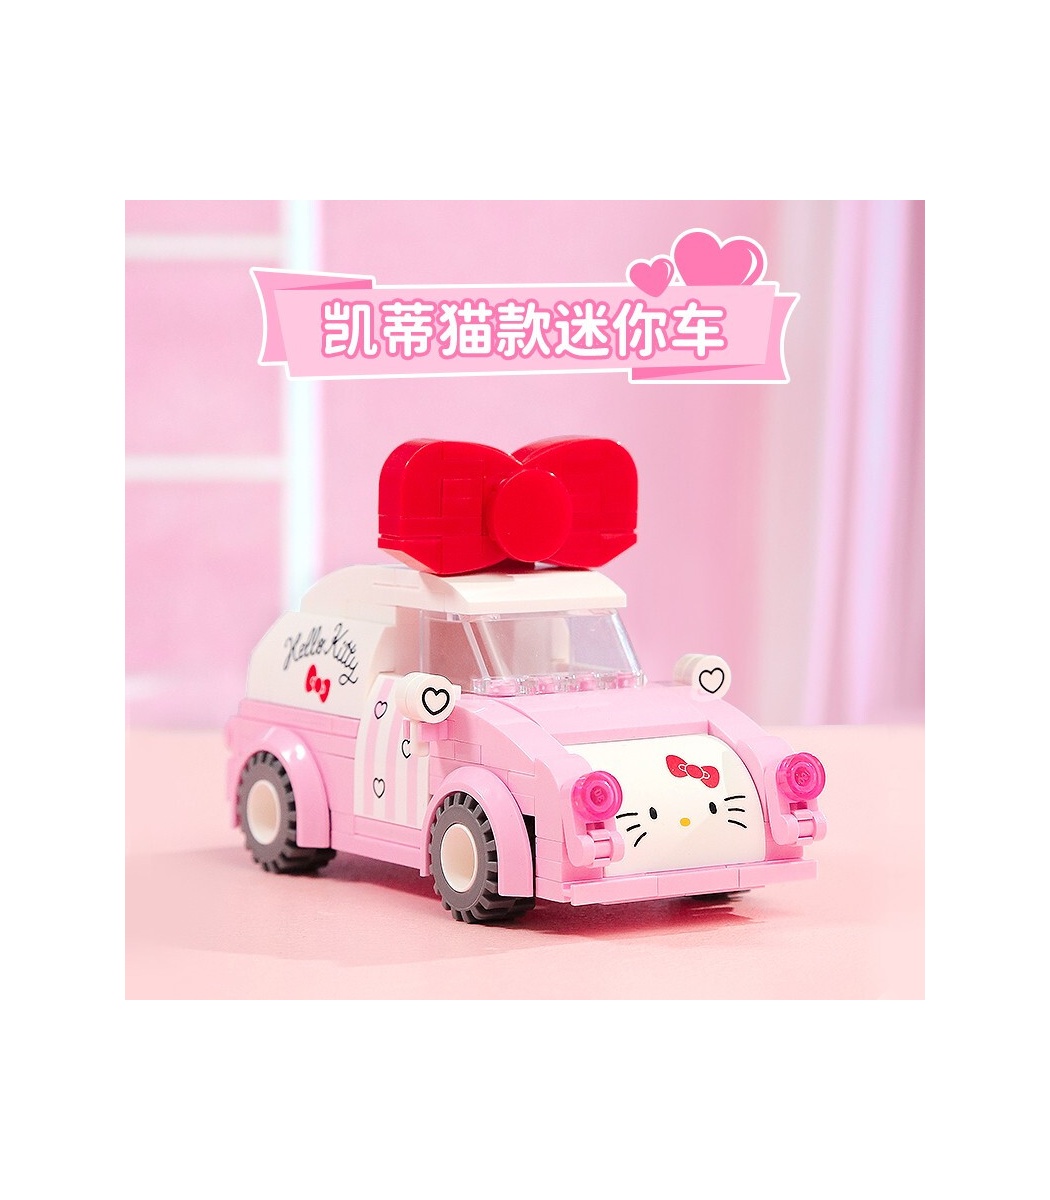 Keeppley K20805 Hello Kitty Series Mini Car Building Blocks Toy Set 